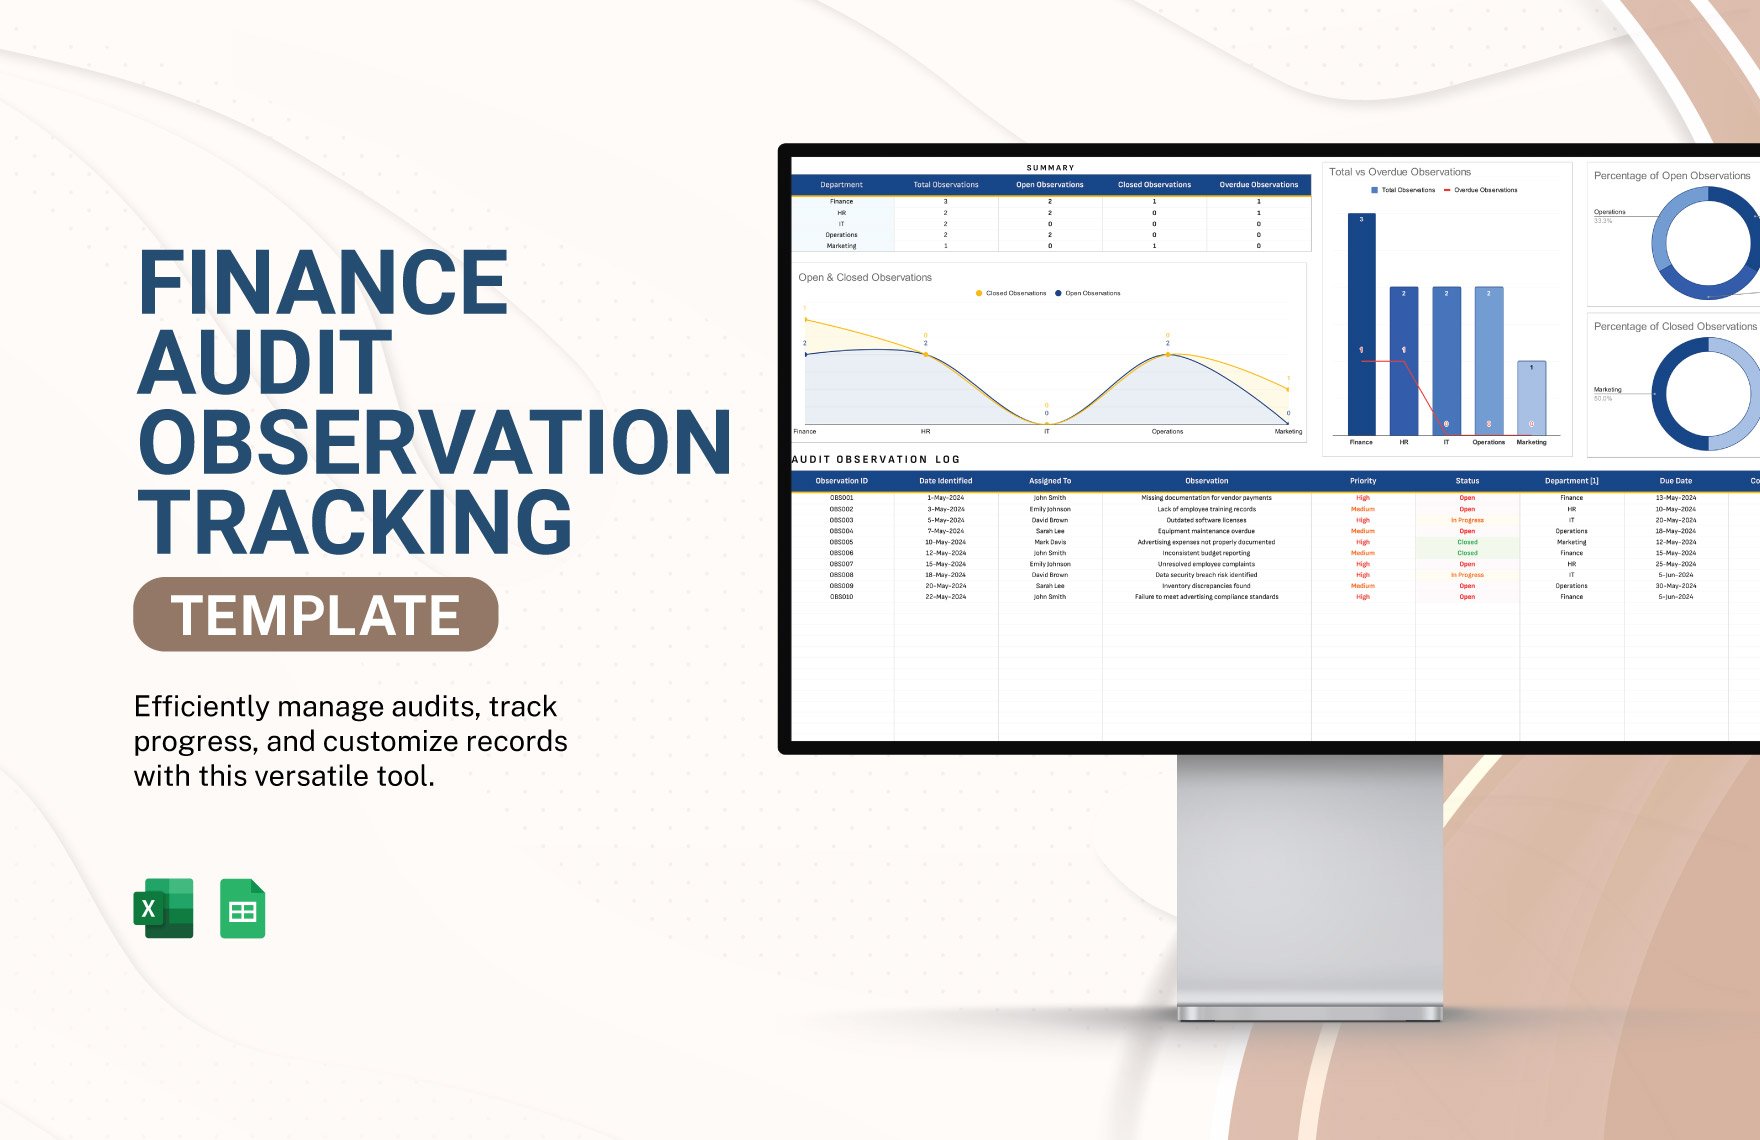 Finance Audit Observation Tracking Template